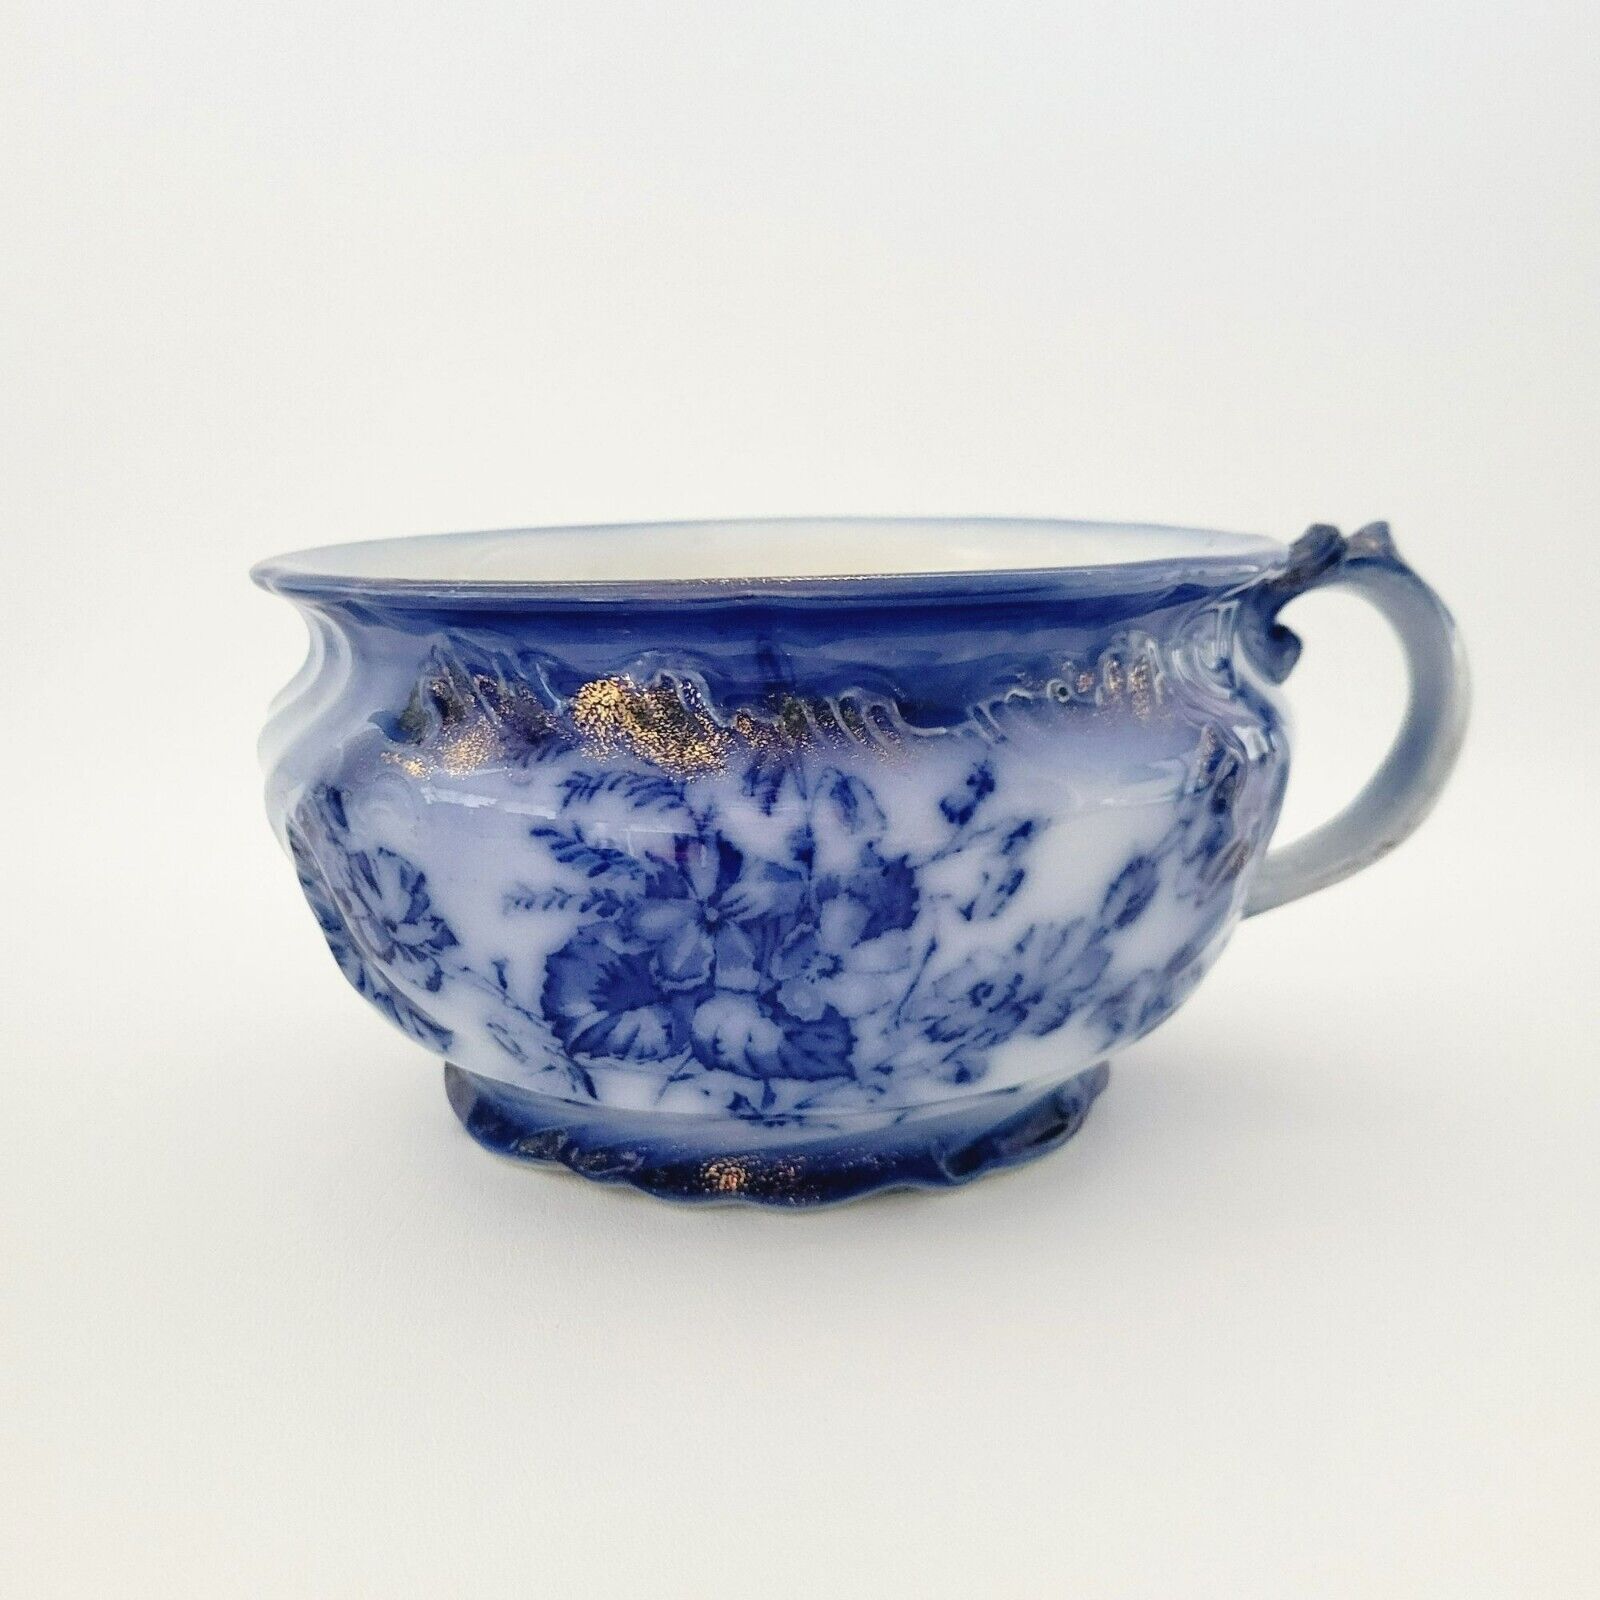 Antique Flow Blue Floral Chamber Pot, Gold Accents, Embossed Edges, c.1840-1915